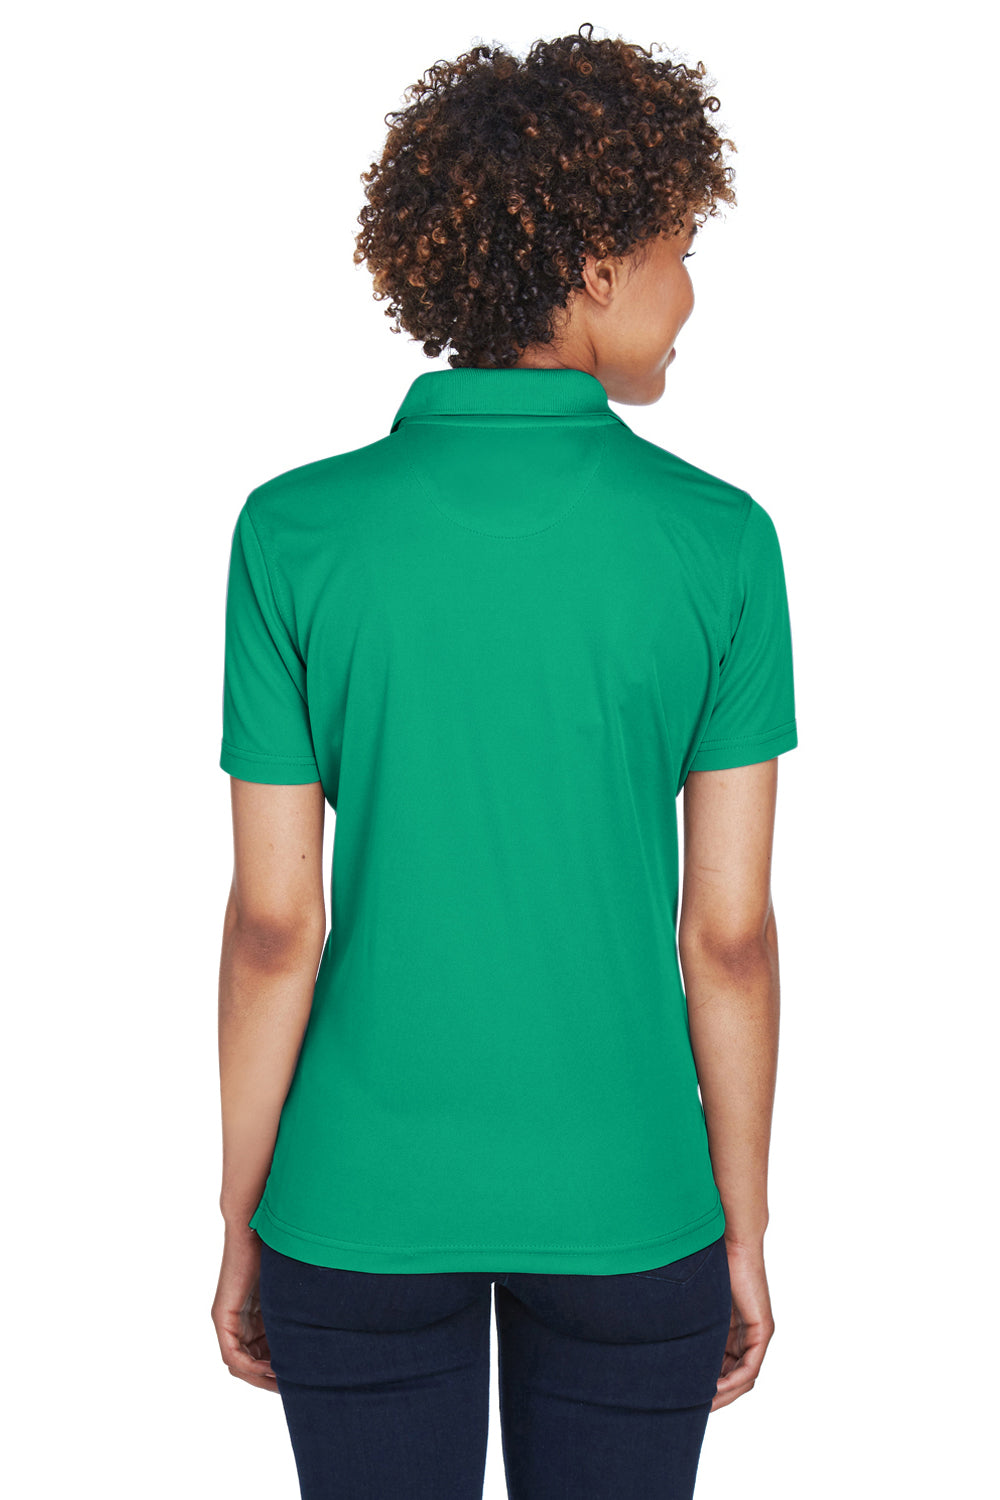 UltraClub 8210L Womens Cool & Dry Moisture Wicking Short Sleeve Polo Shirt Kelly Green Back